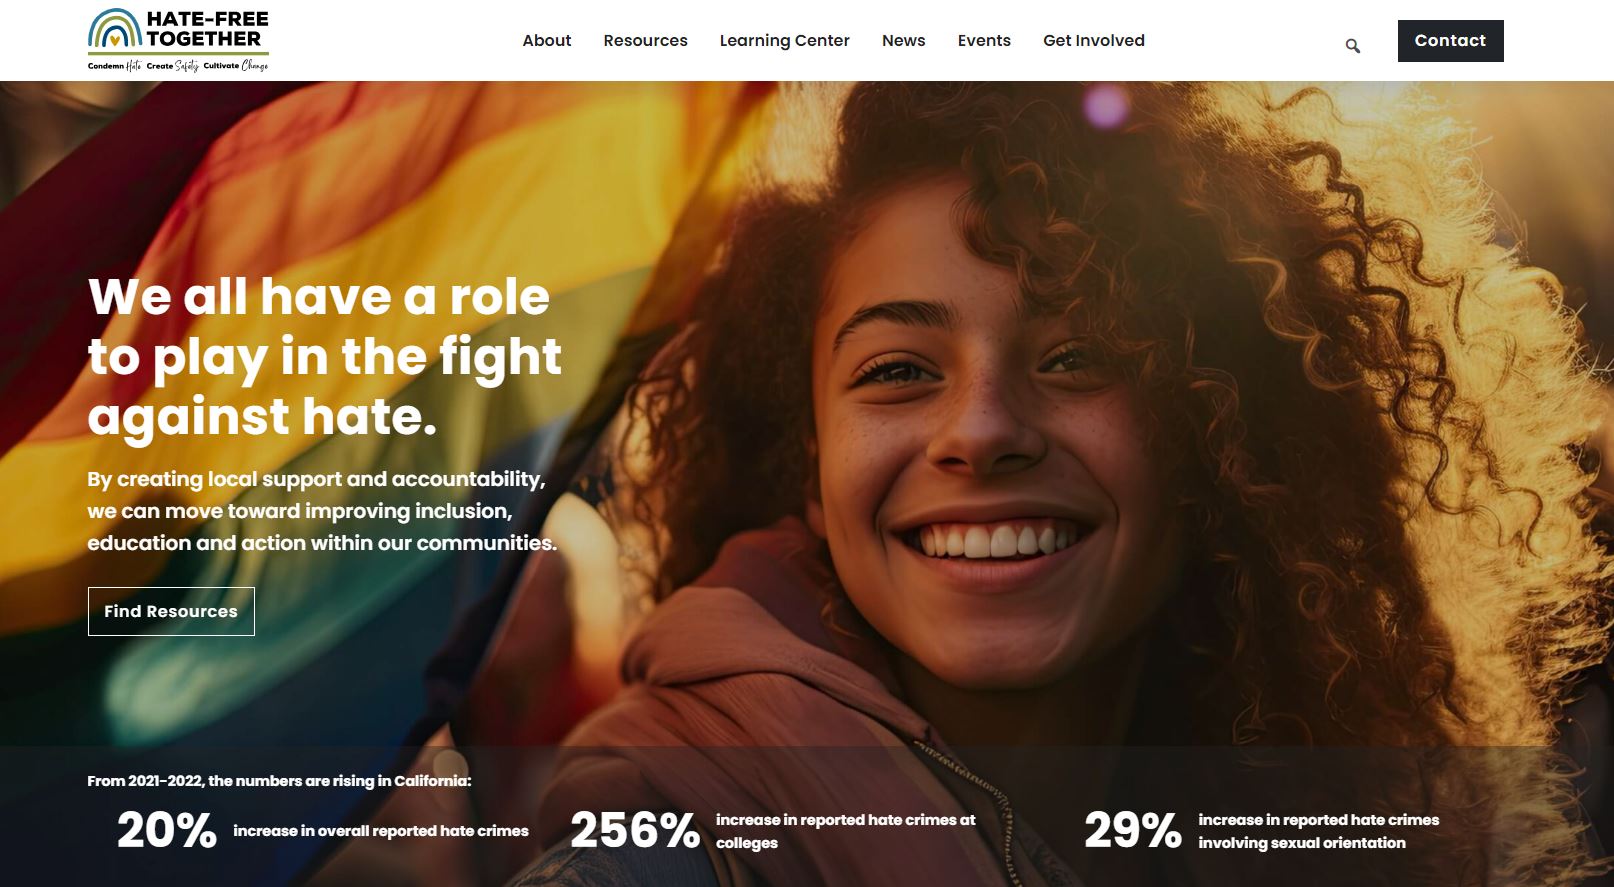 Screenshot of Hate-Free Together website